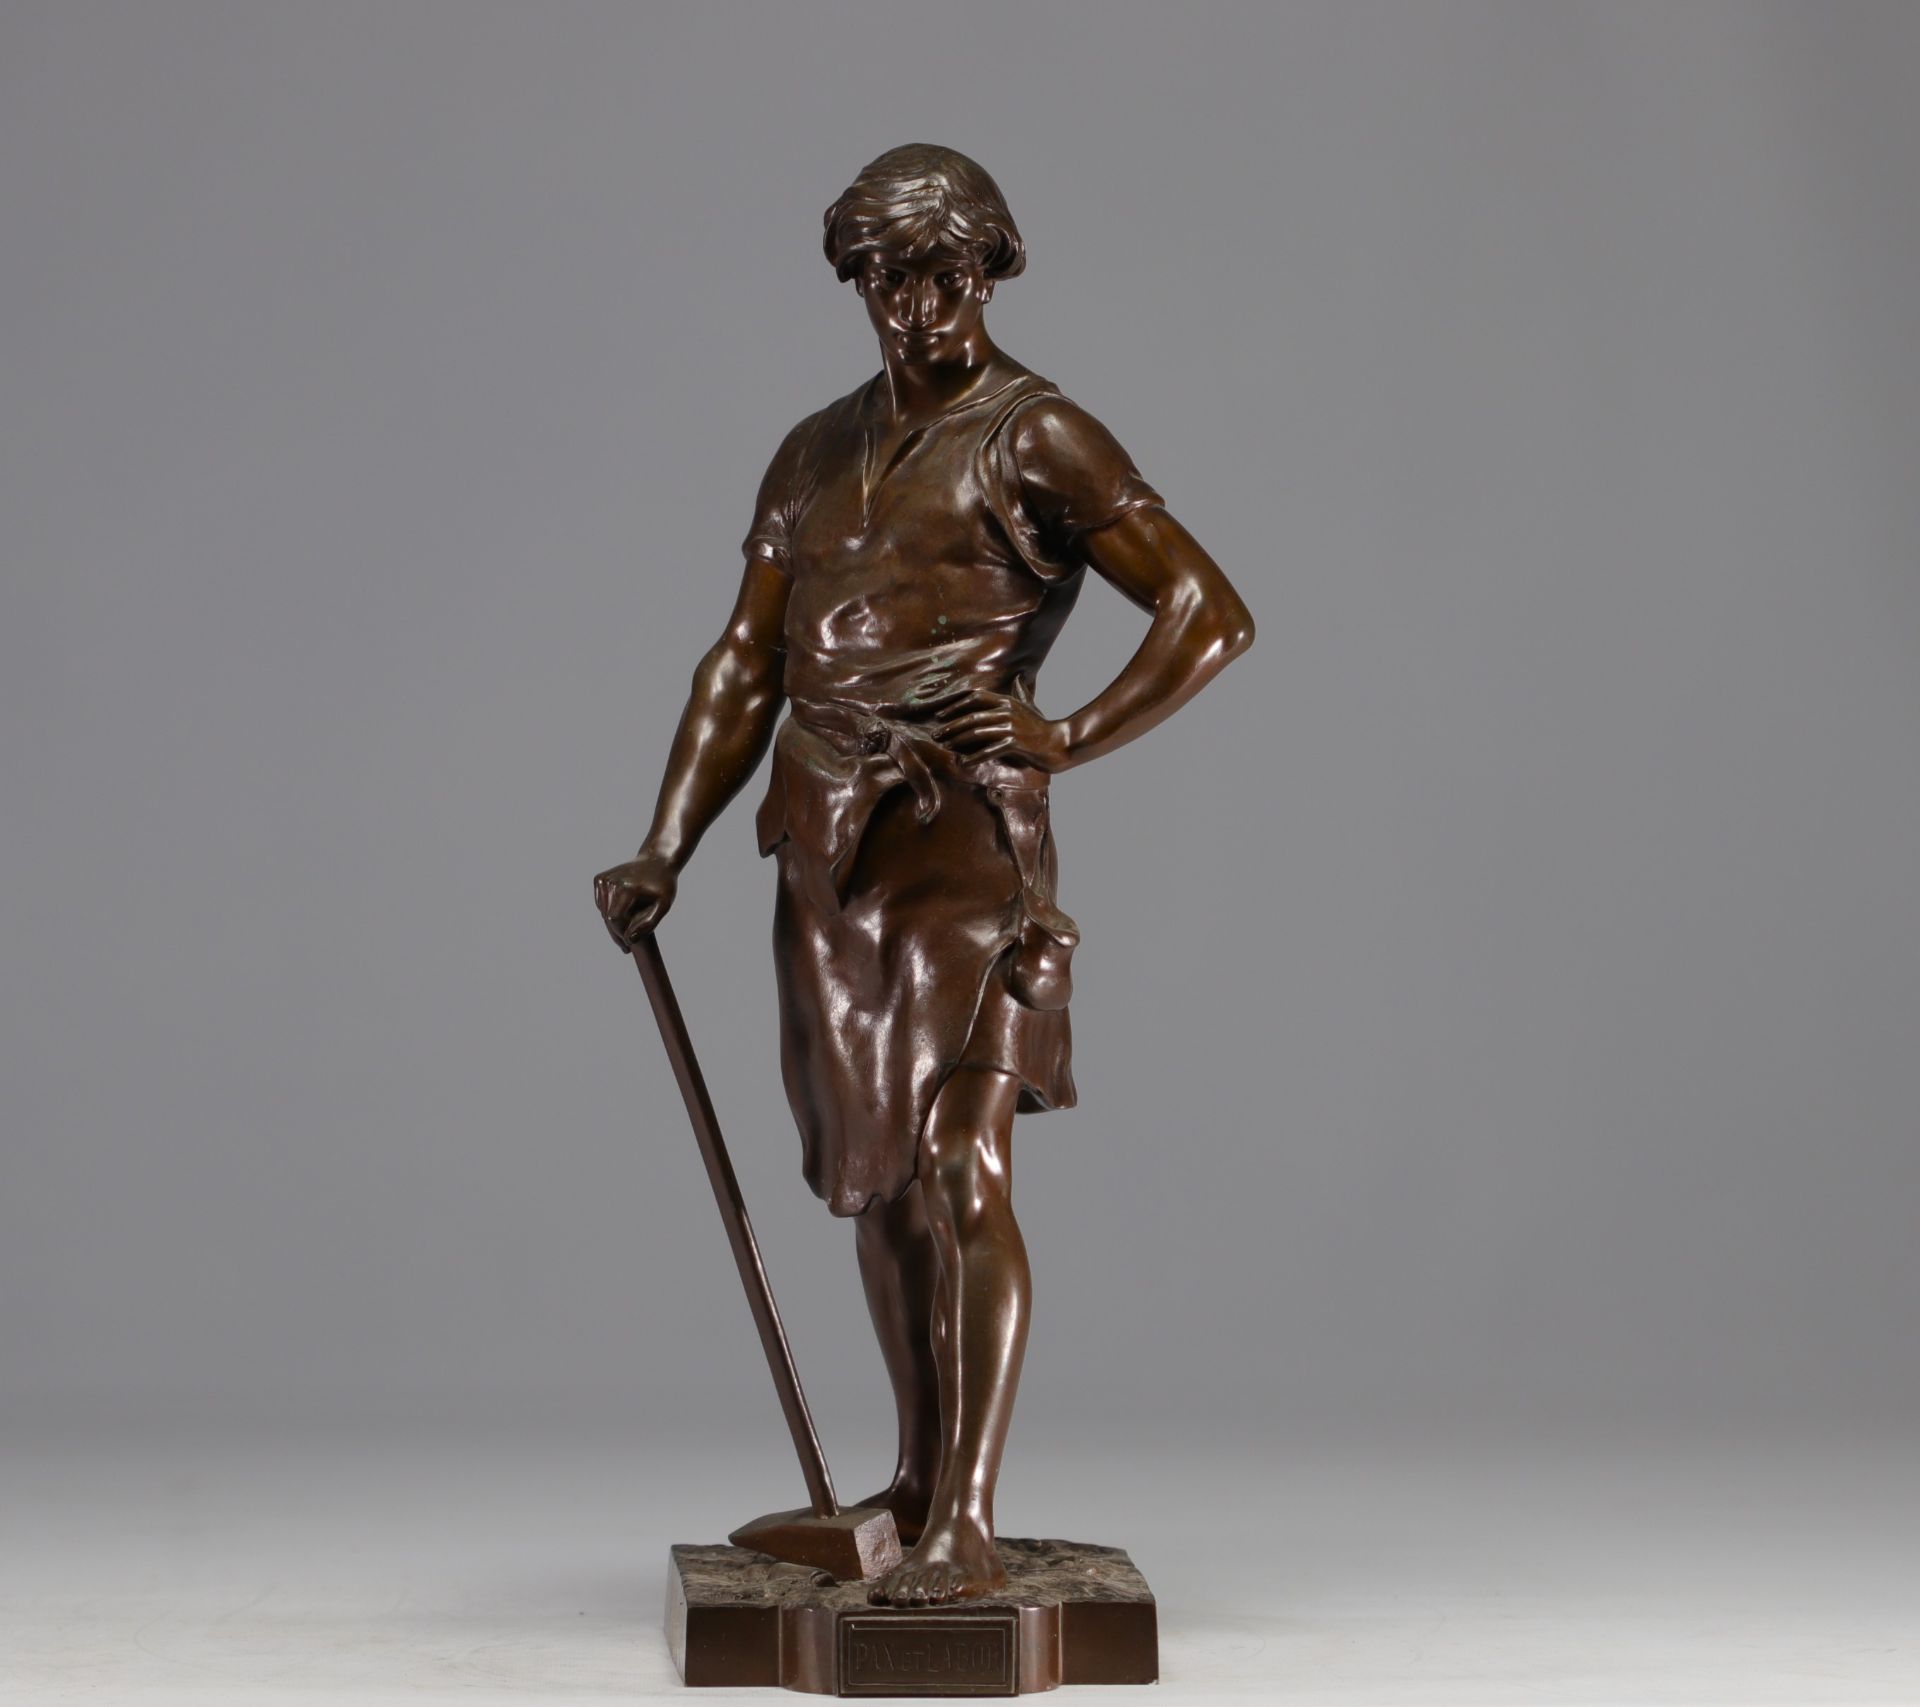 Emile - Louis PICAULT (1833-1915). "Pax et Labor" Statue in bronze.